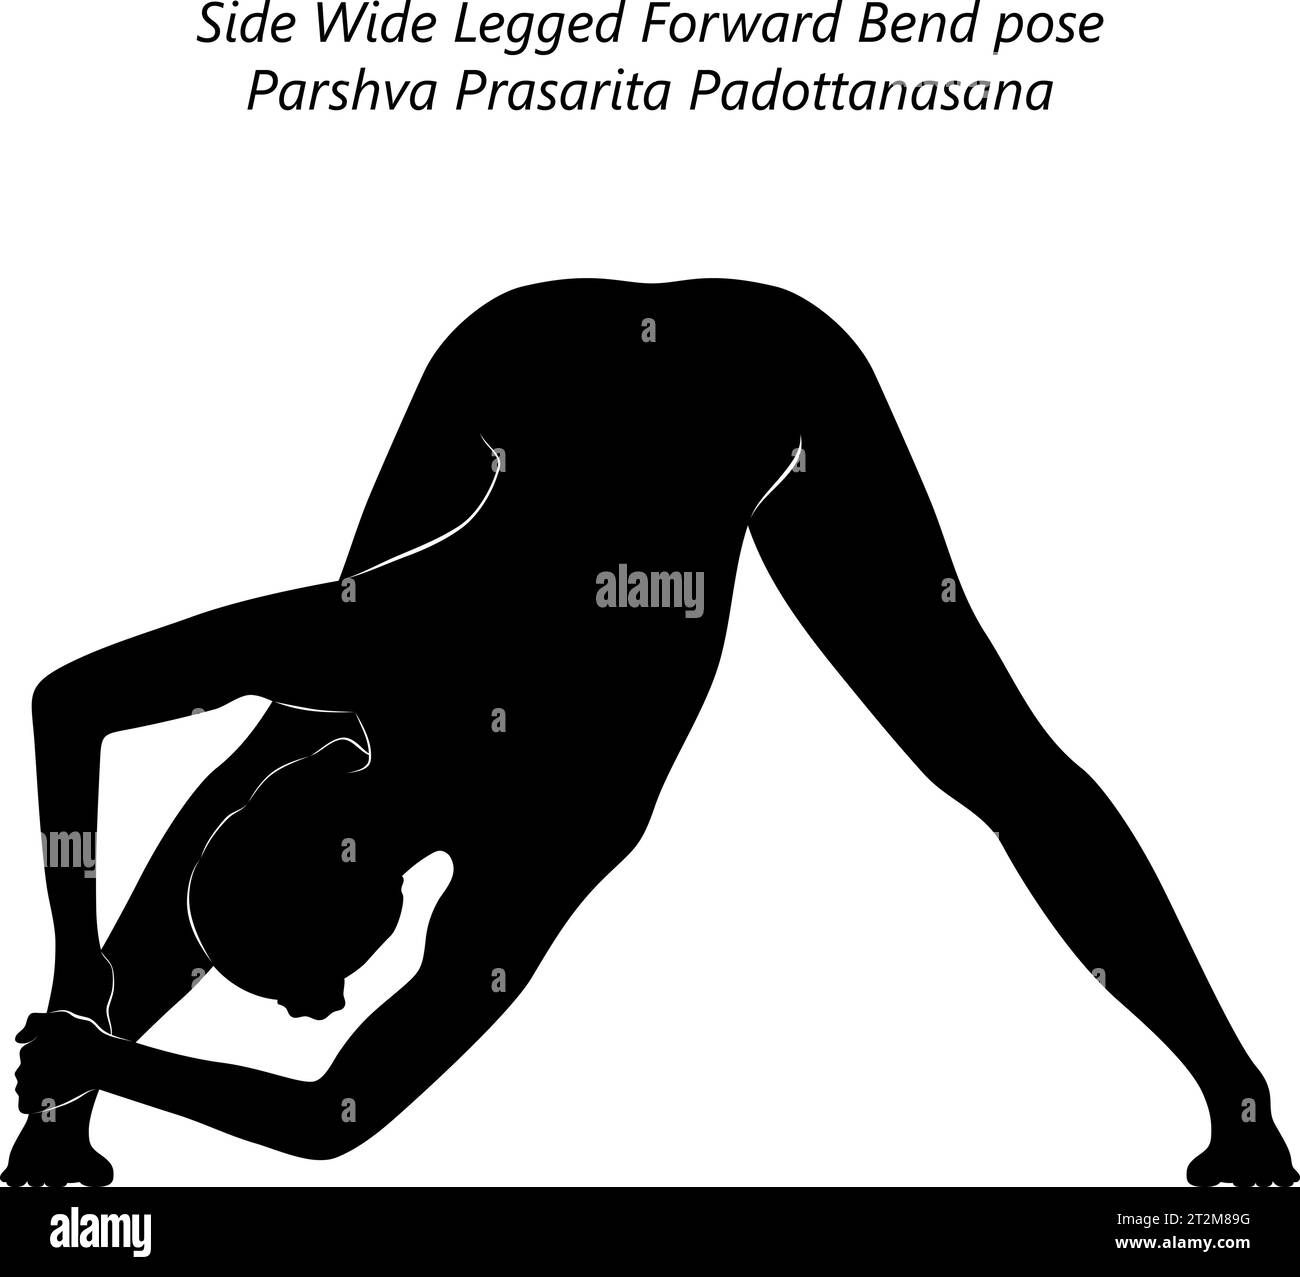 Silhouette of woman doing yoga Parshva Prasarita Padottanasana. Side Wide Legged Forward Bend pose. Isolated vector illustration. Stock Vector